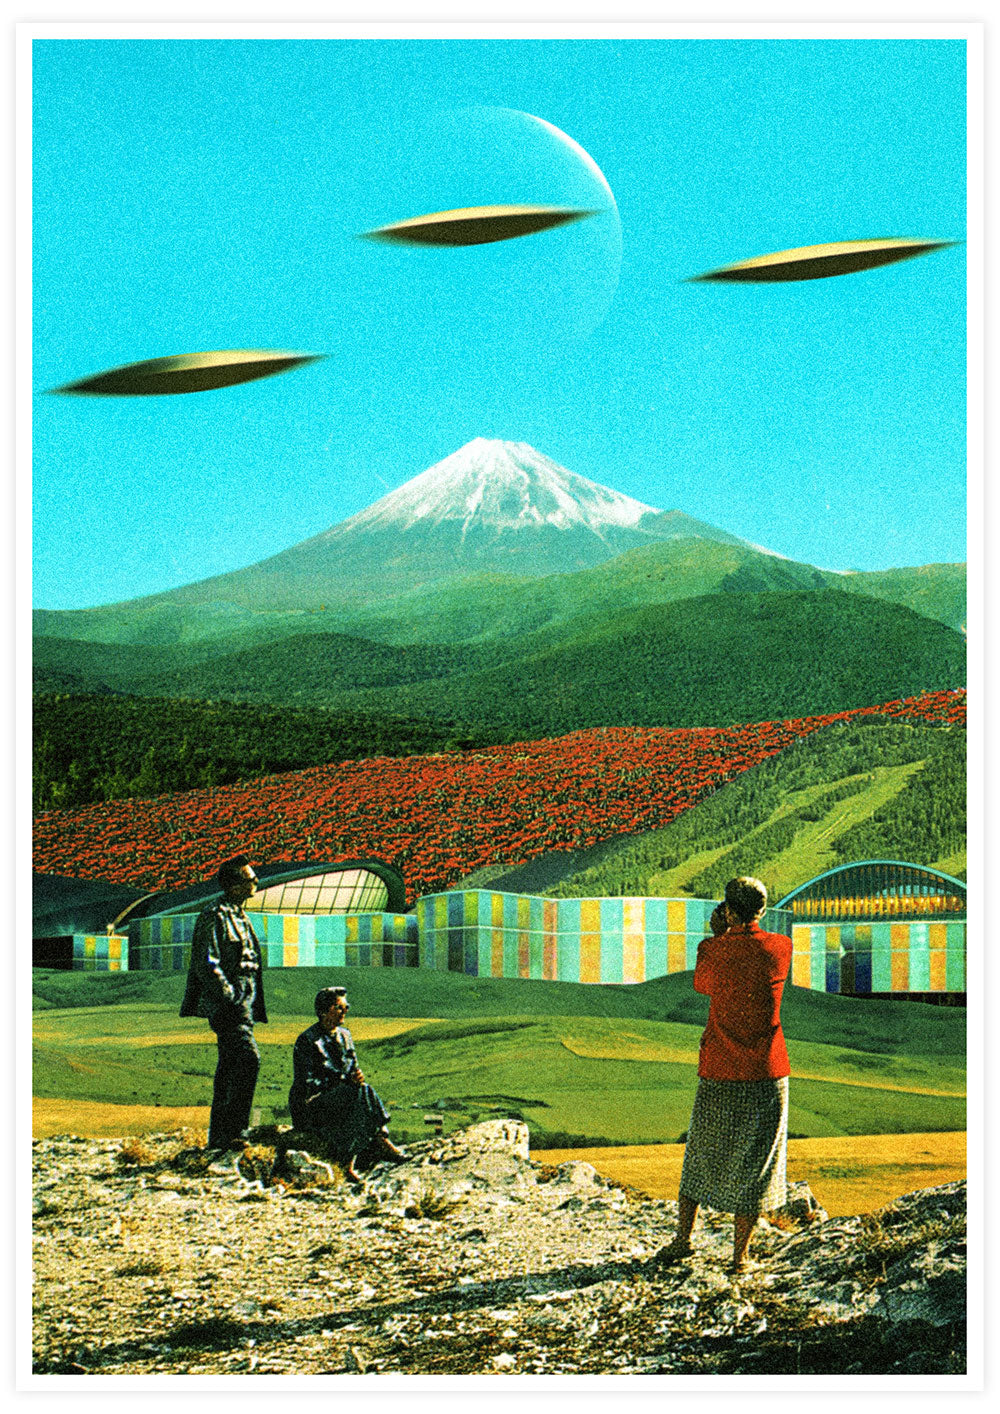 Alien Invasion Collage Poster